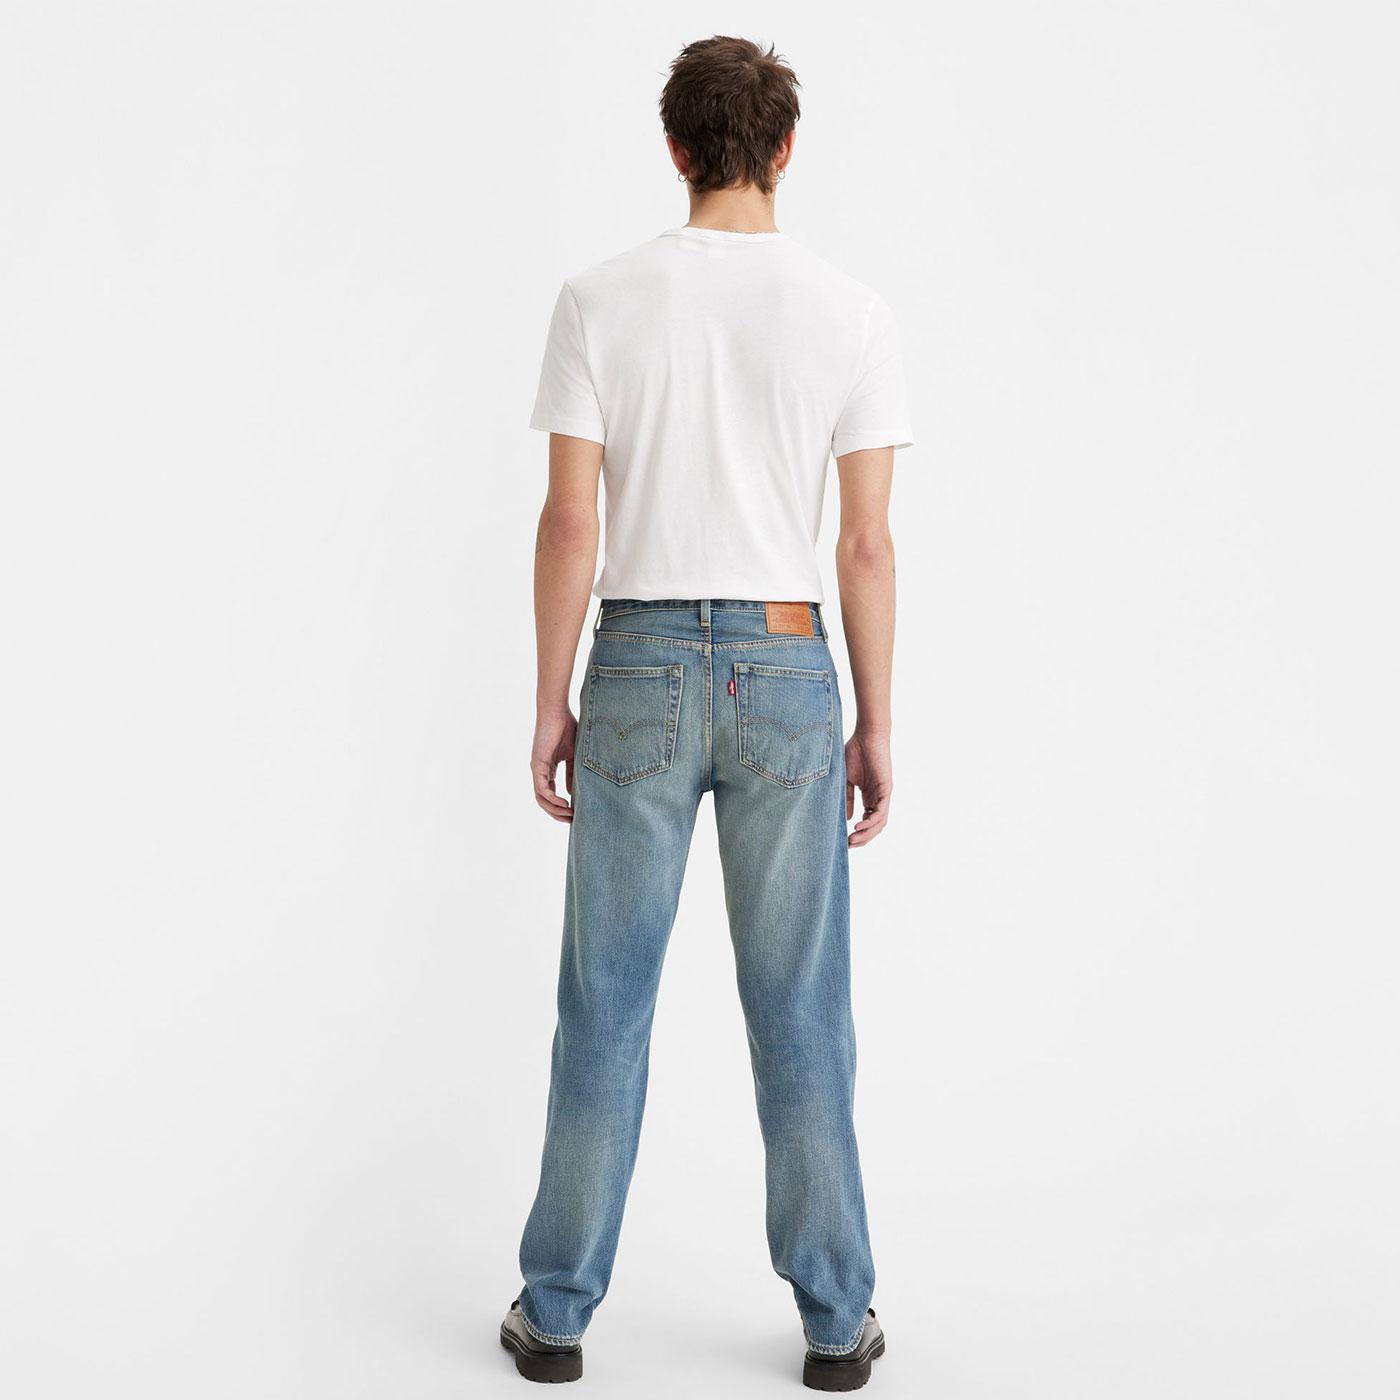 Levi 501 1954 Straight Retro Denim Jeans in Misty Lake Worn In